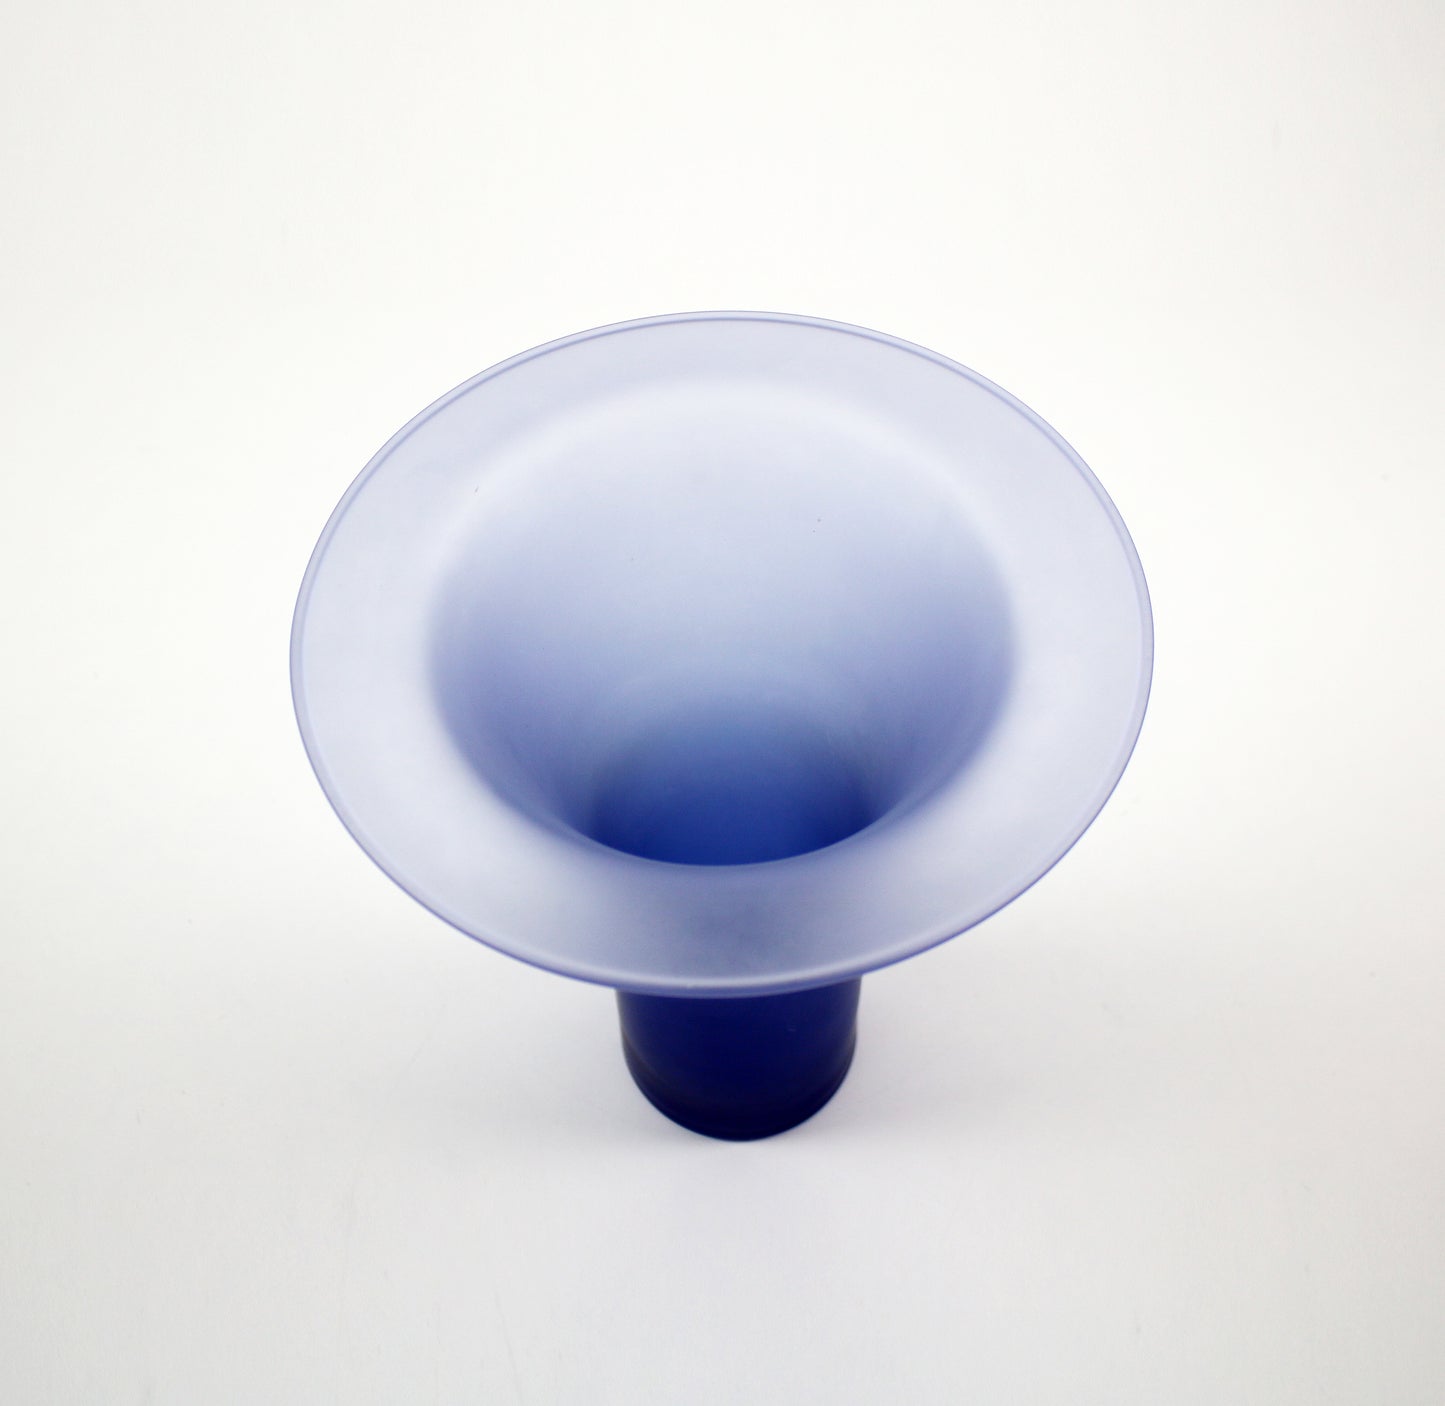 Satin frosted blue glass trumpet vase - 24cm